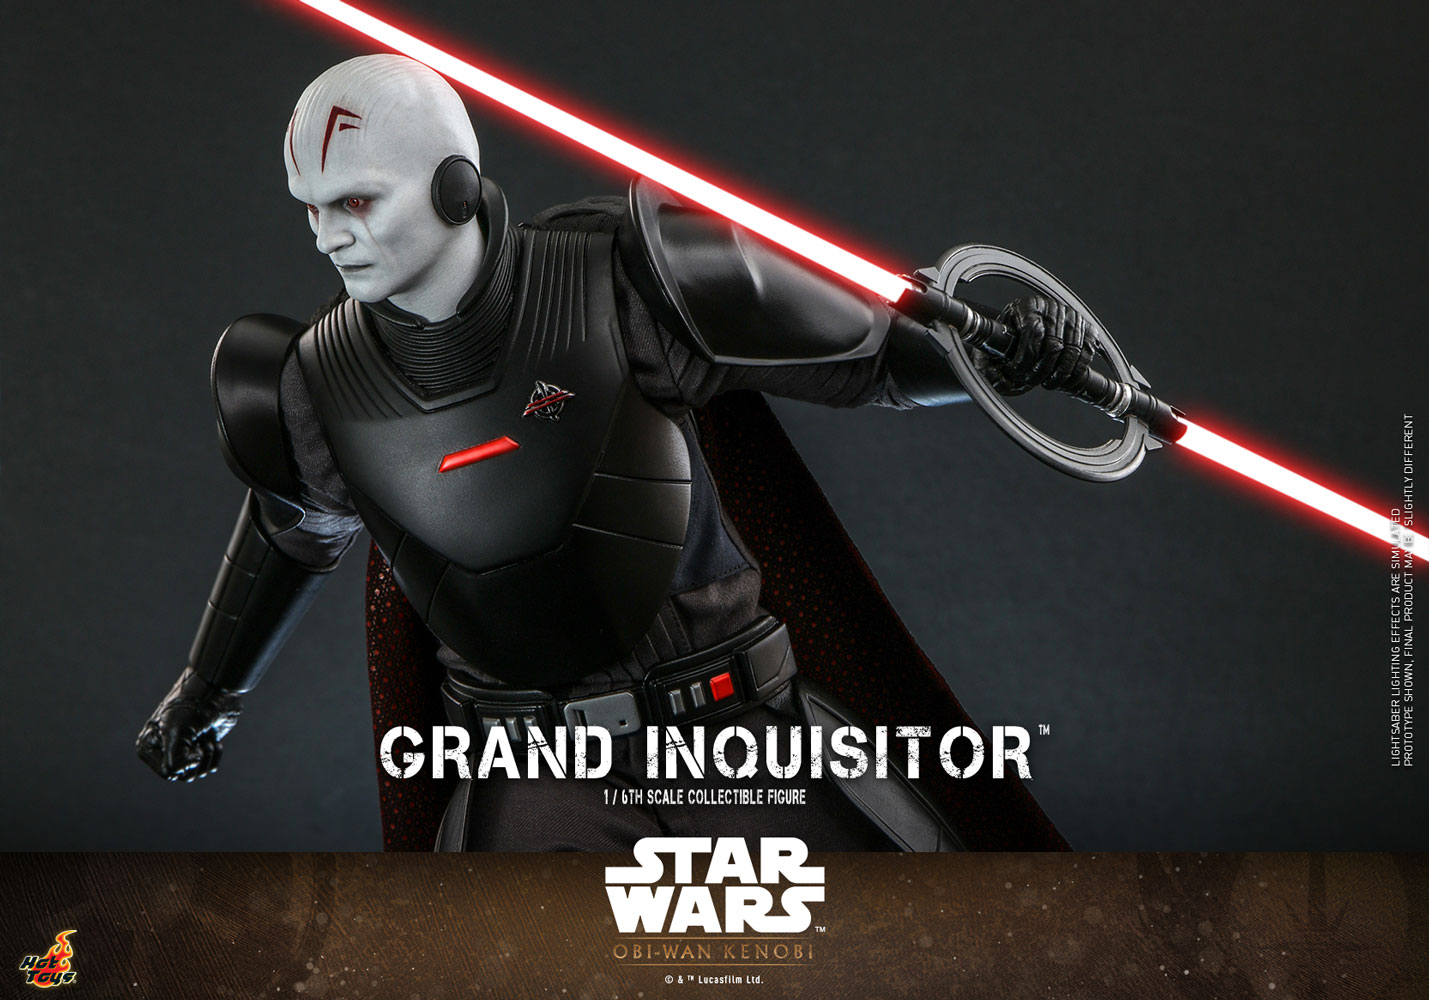 Grand Inquisitor- Prototype Shown